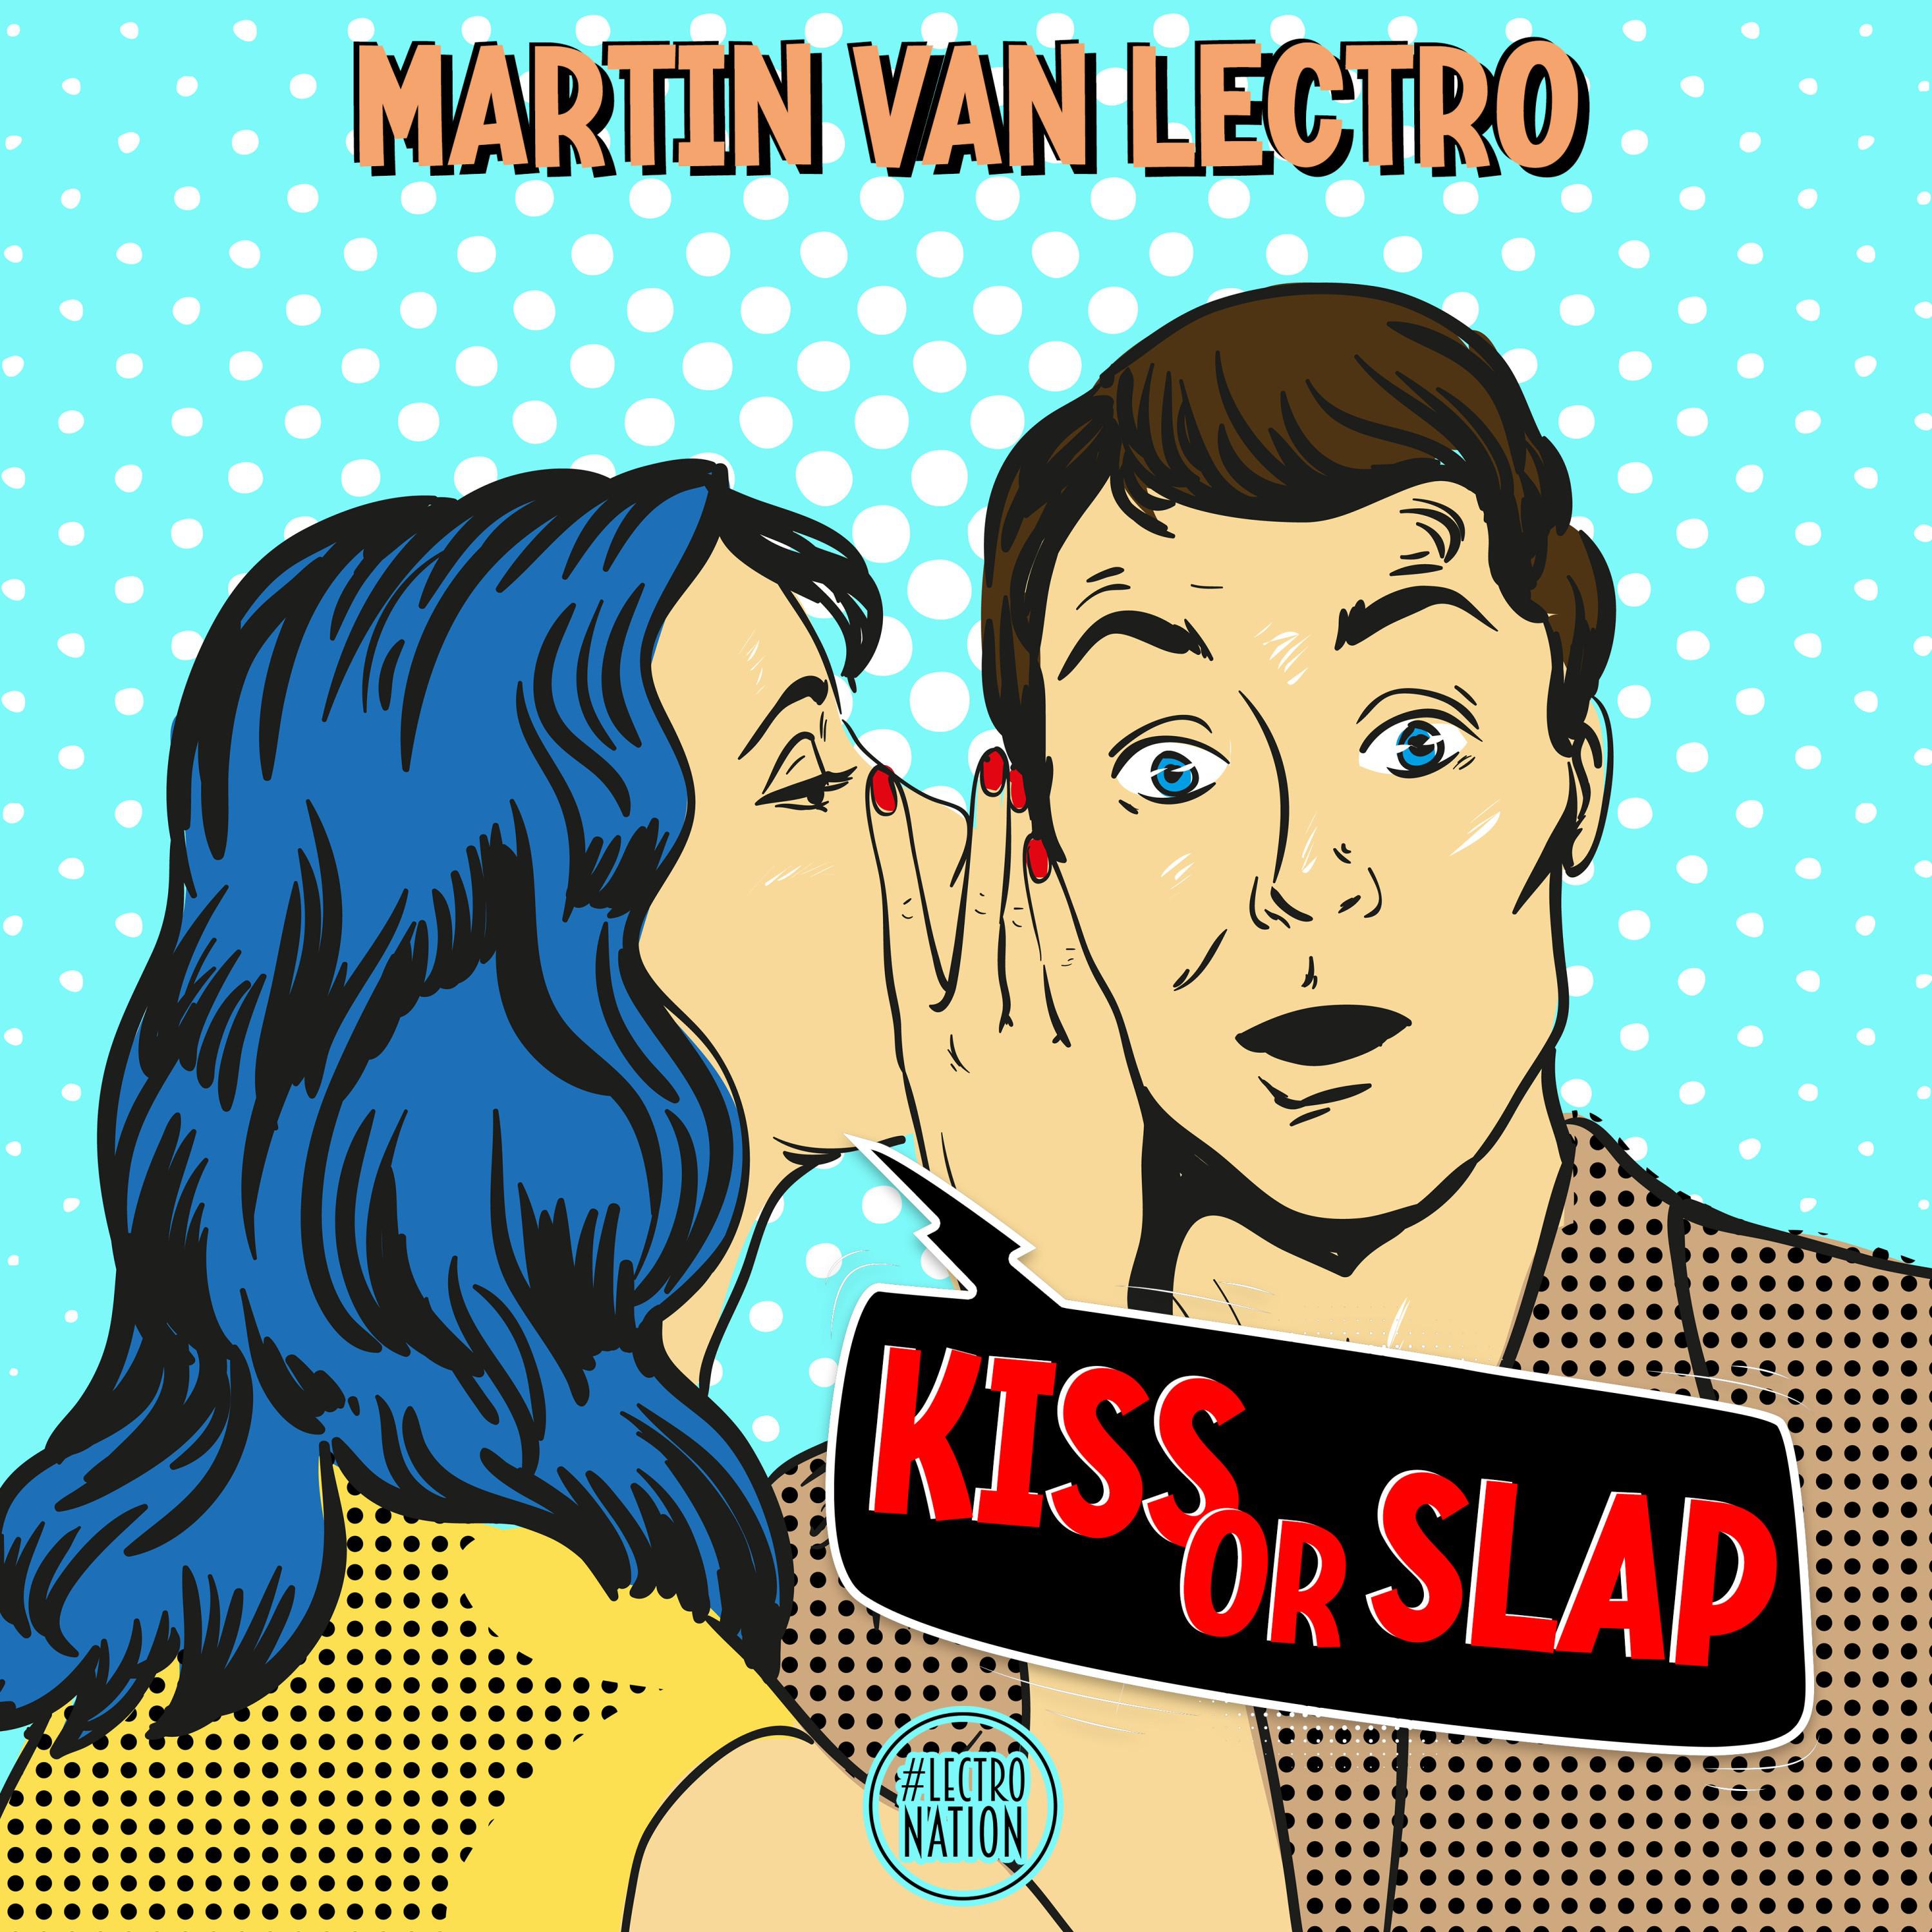 Martin Van Lectro - Kiss or Slap (Extended Mix)